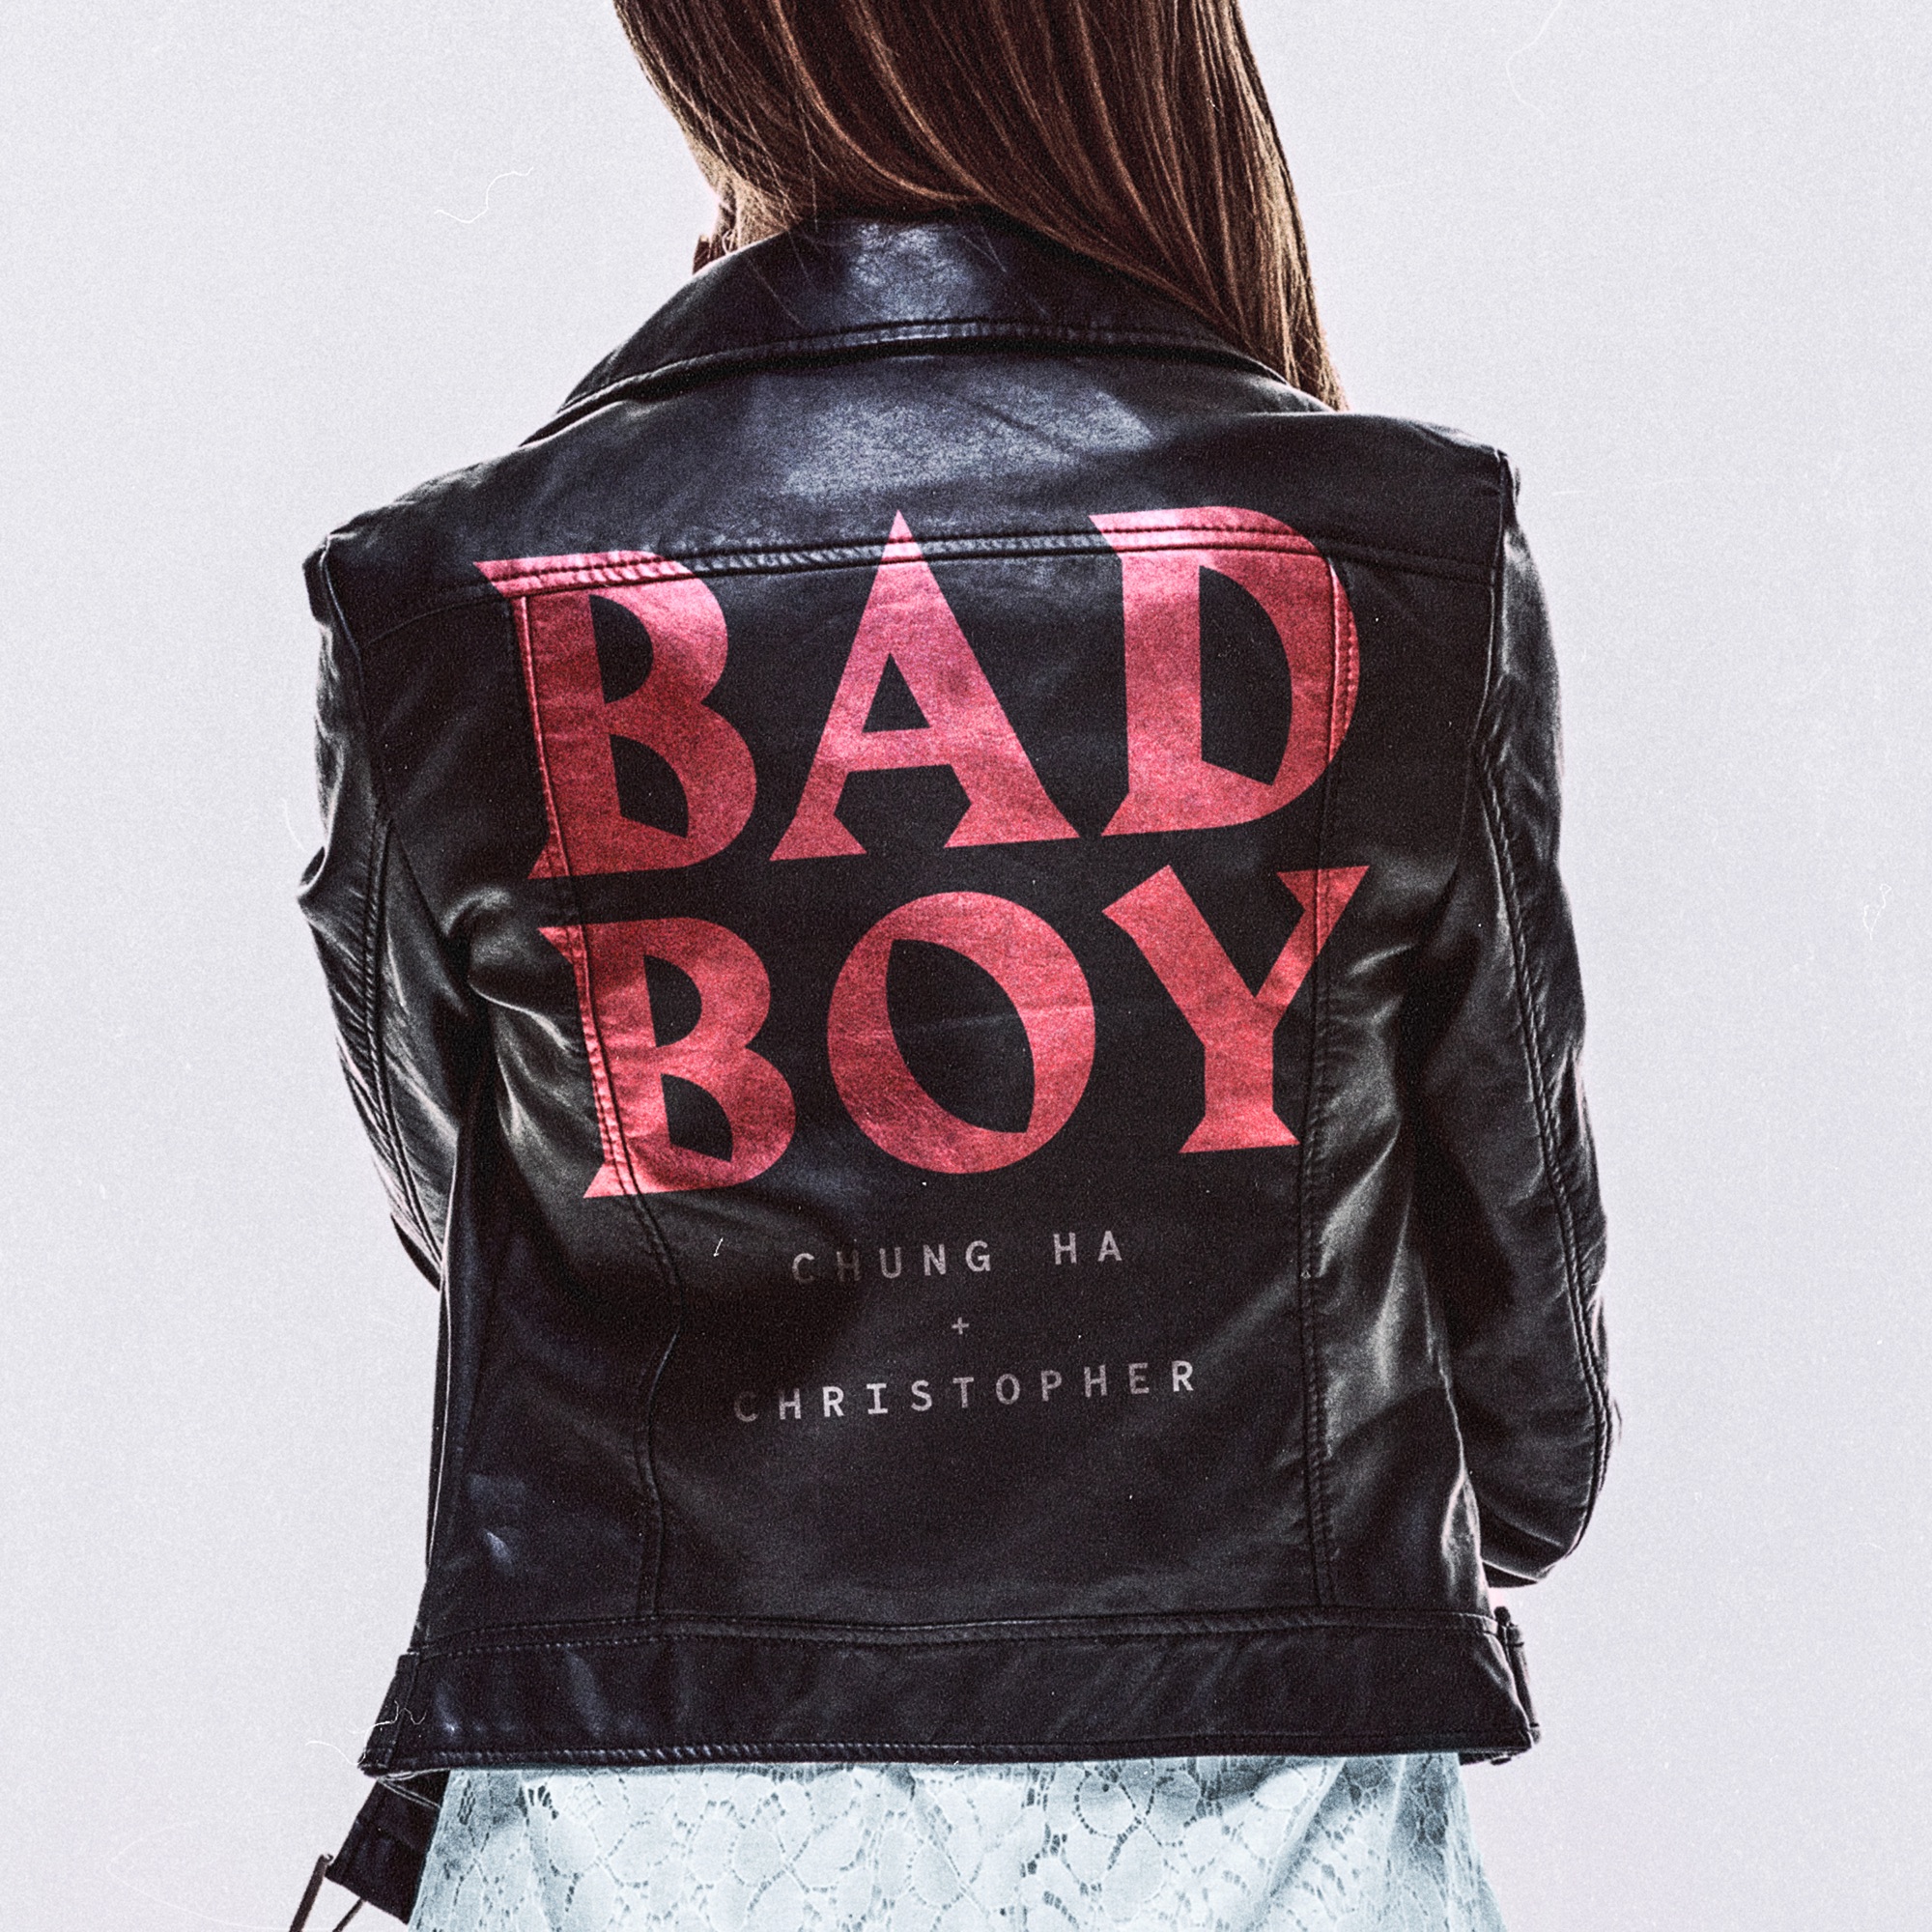 CHUNG HA & Christopher - Bad Boy - Single